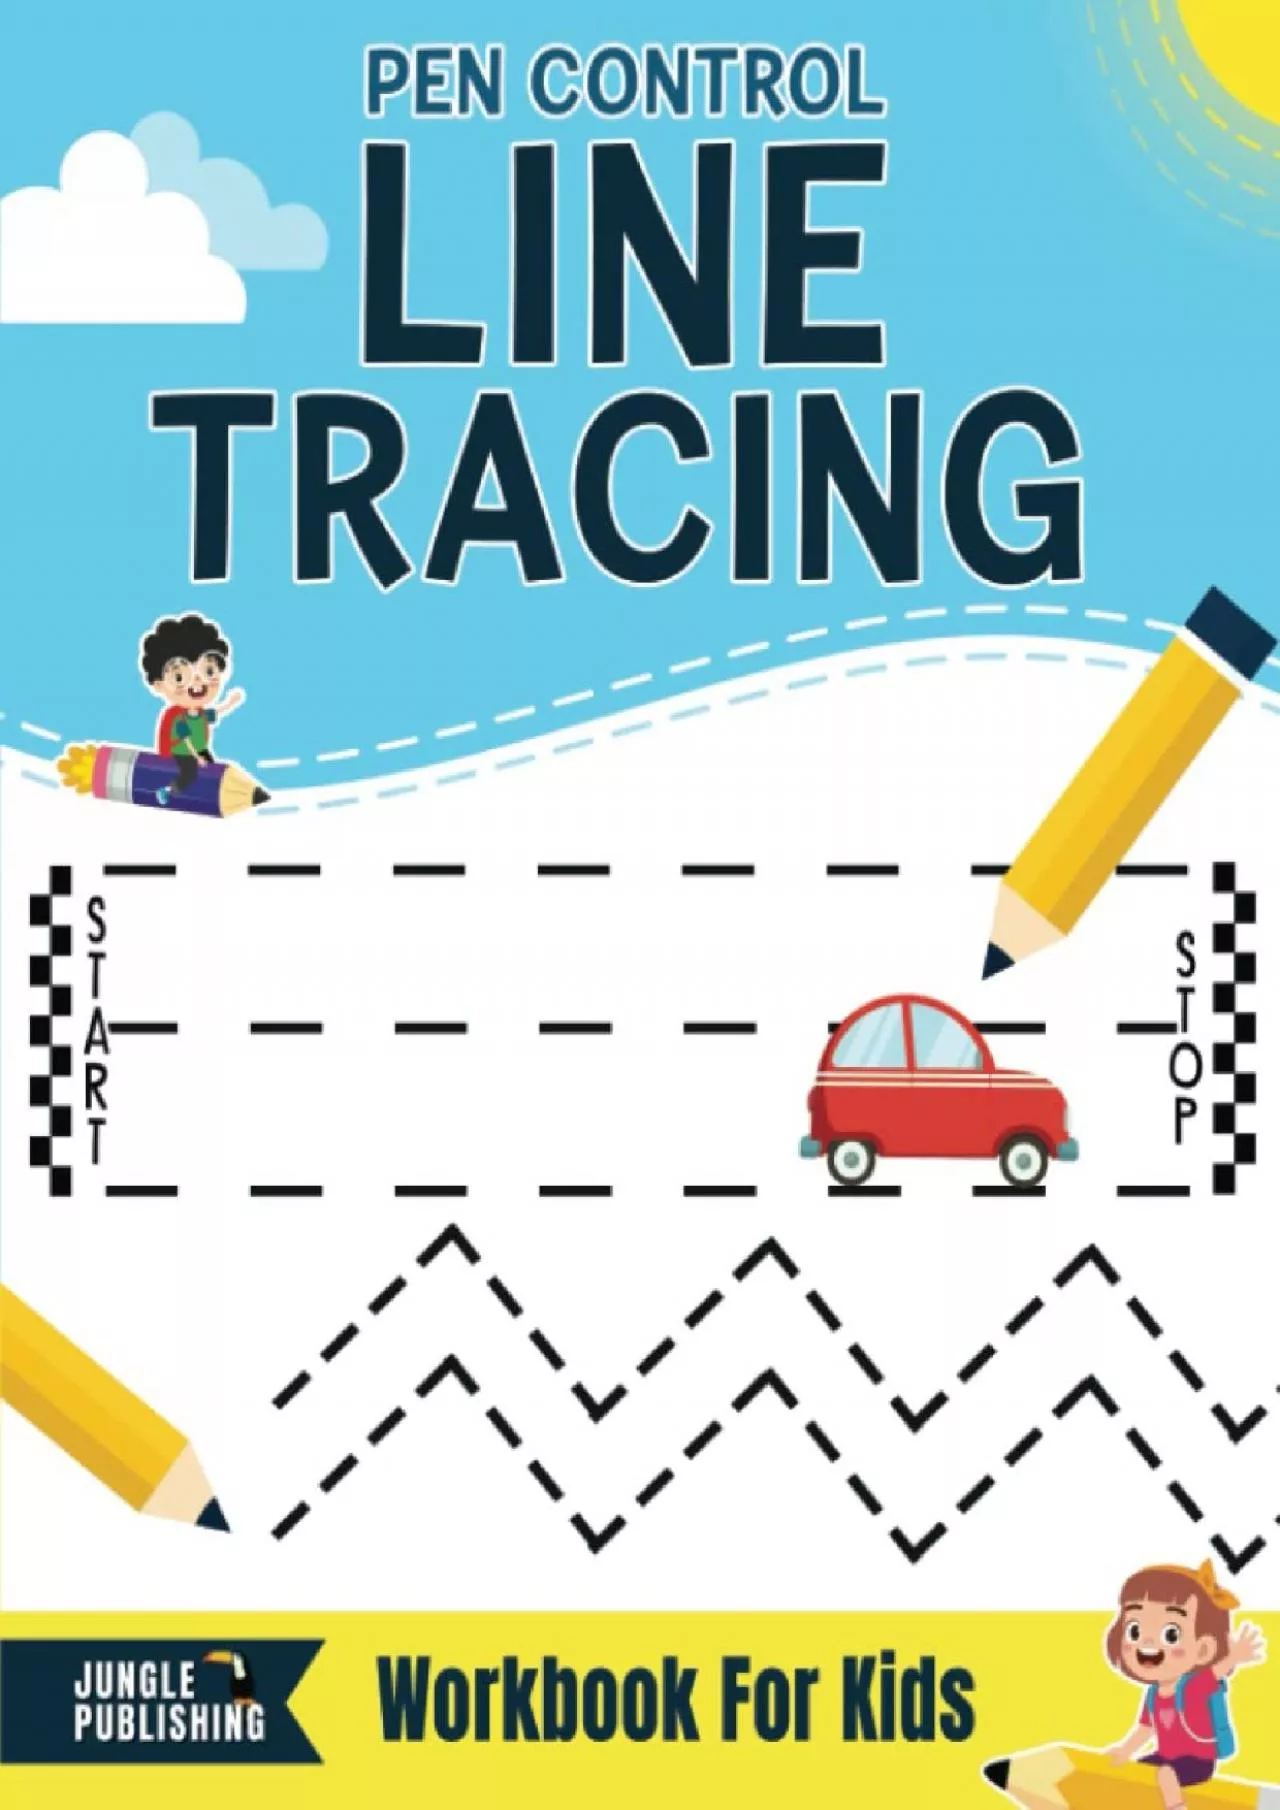 [EBOOK] Pen Control Line Tracing Workbook for Kids: Pencil Control Preschool Activity